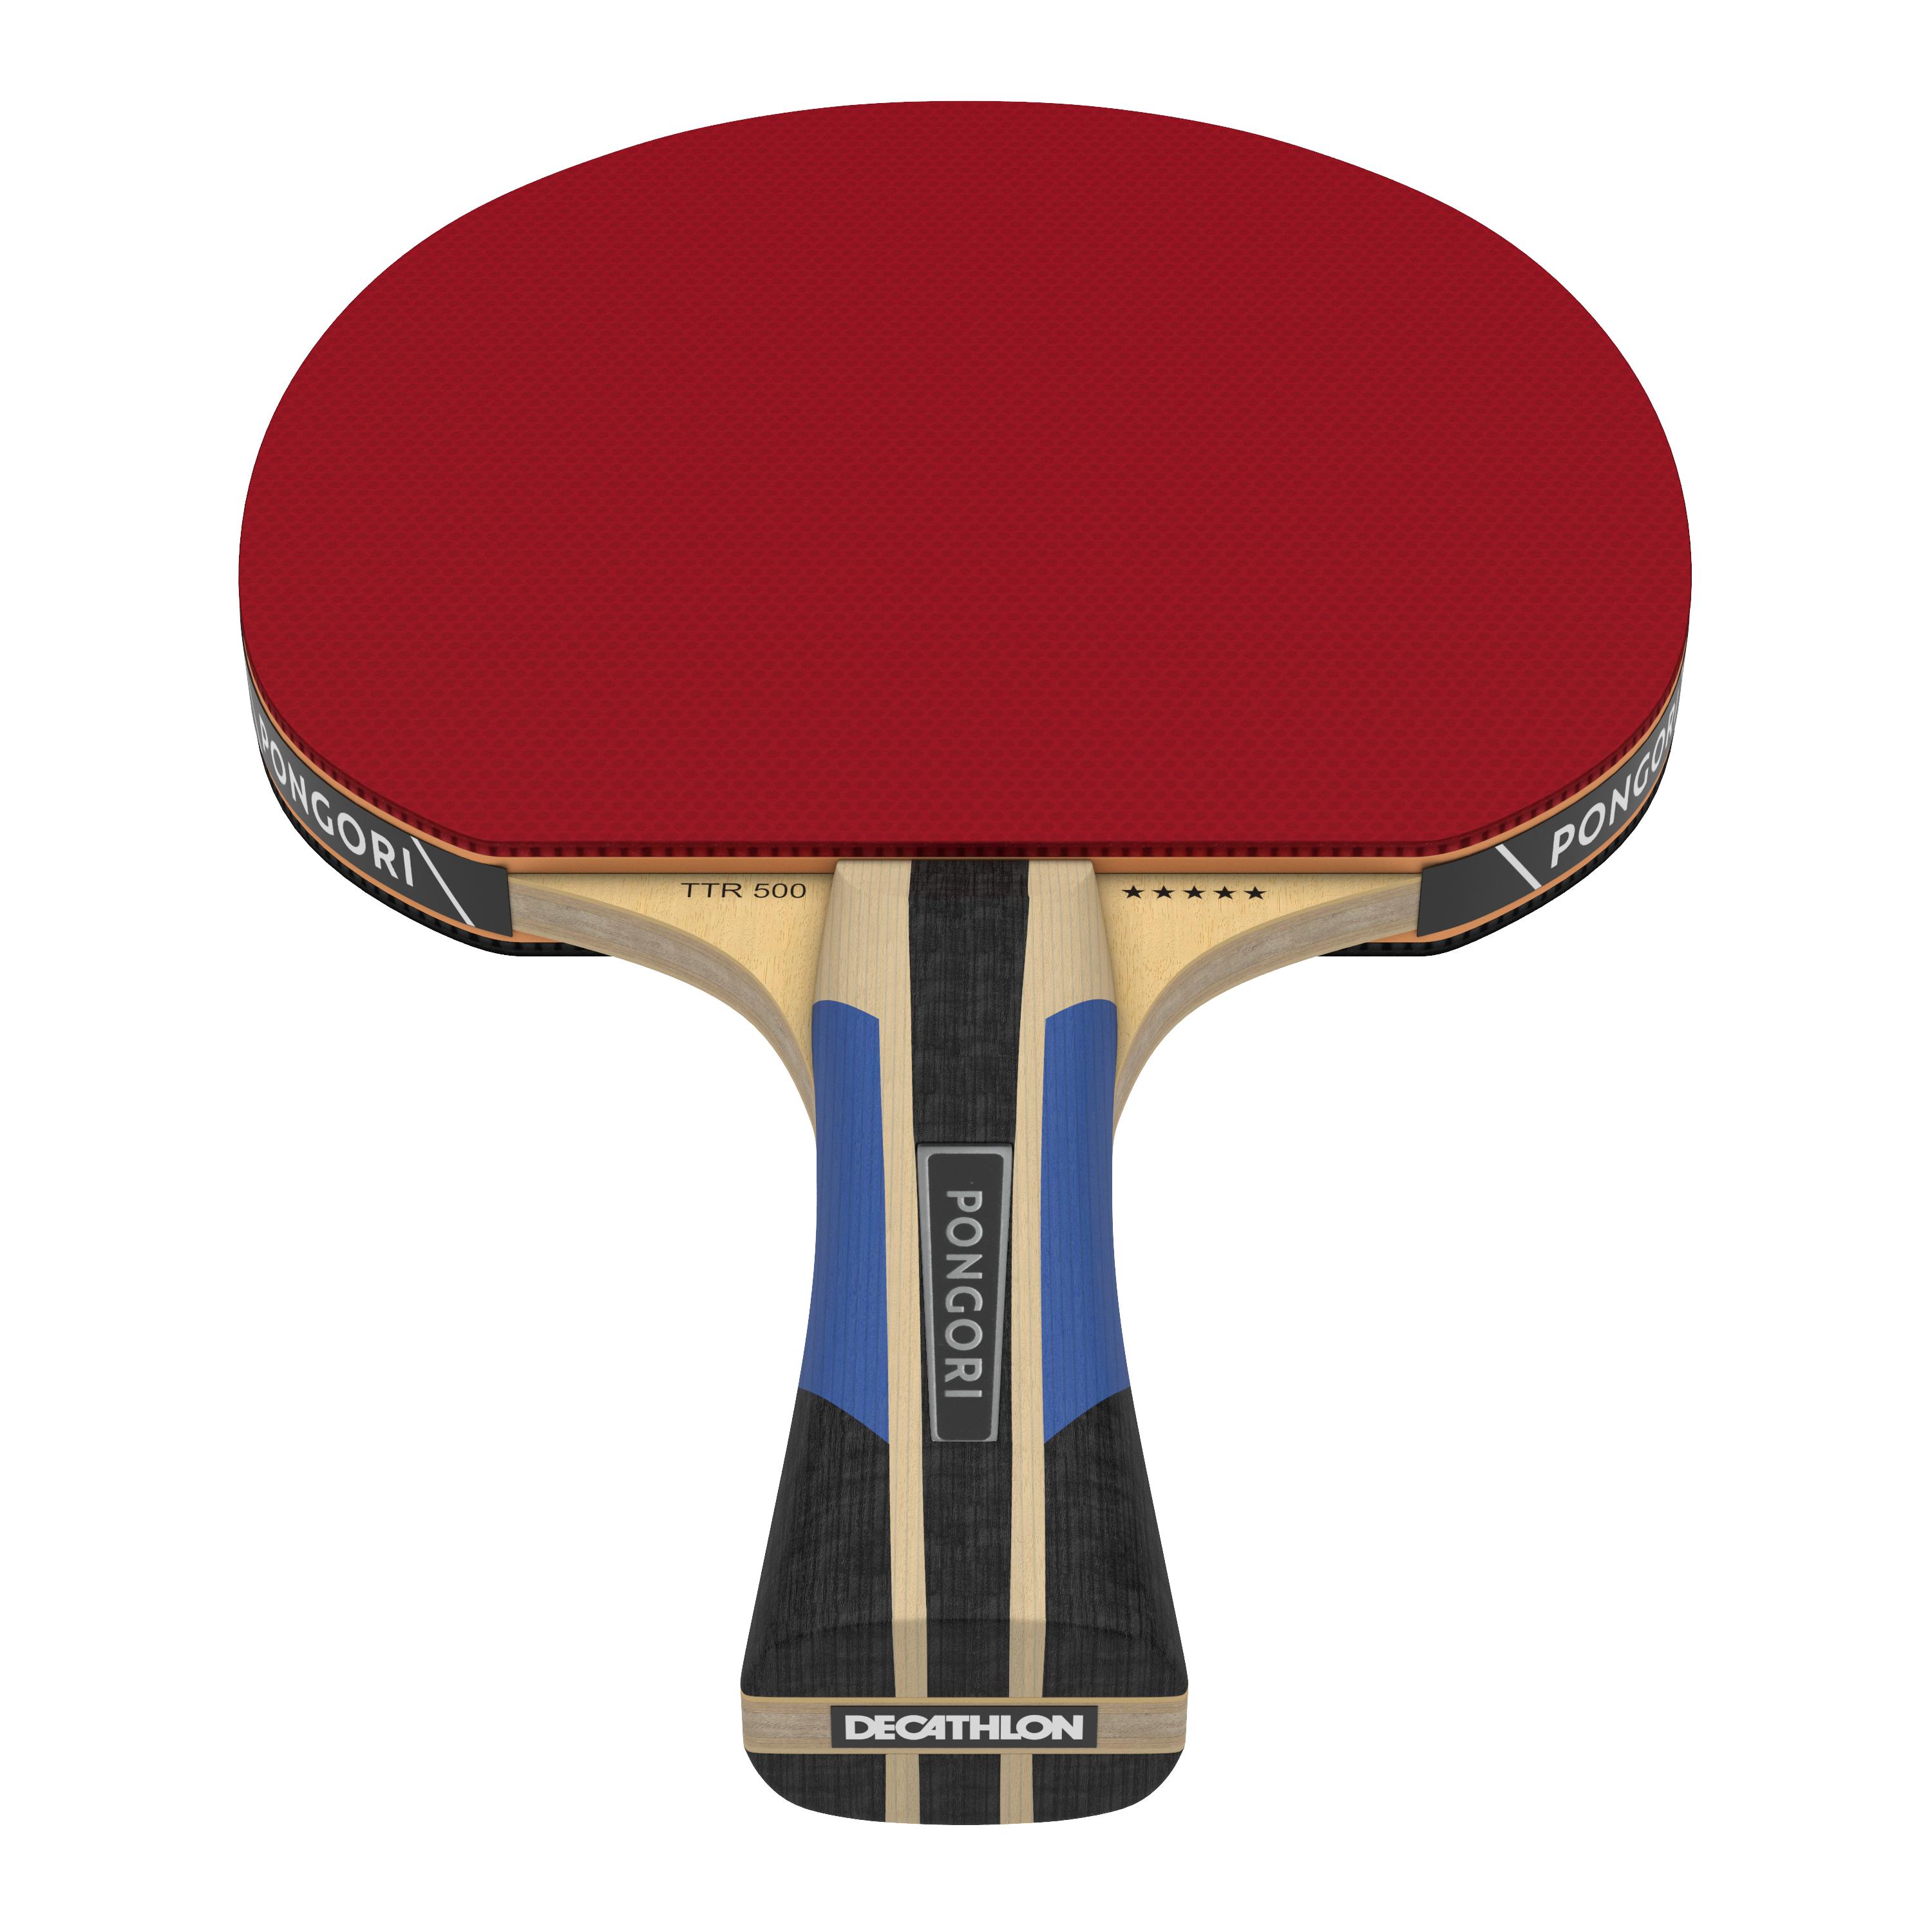 table tennis racket price decathlon